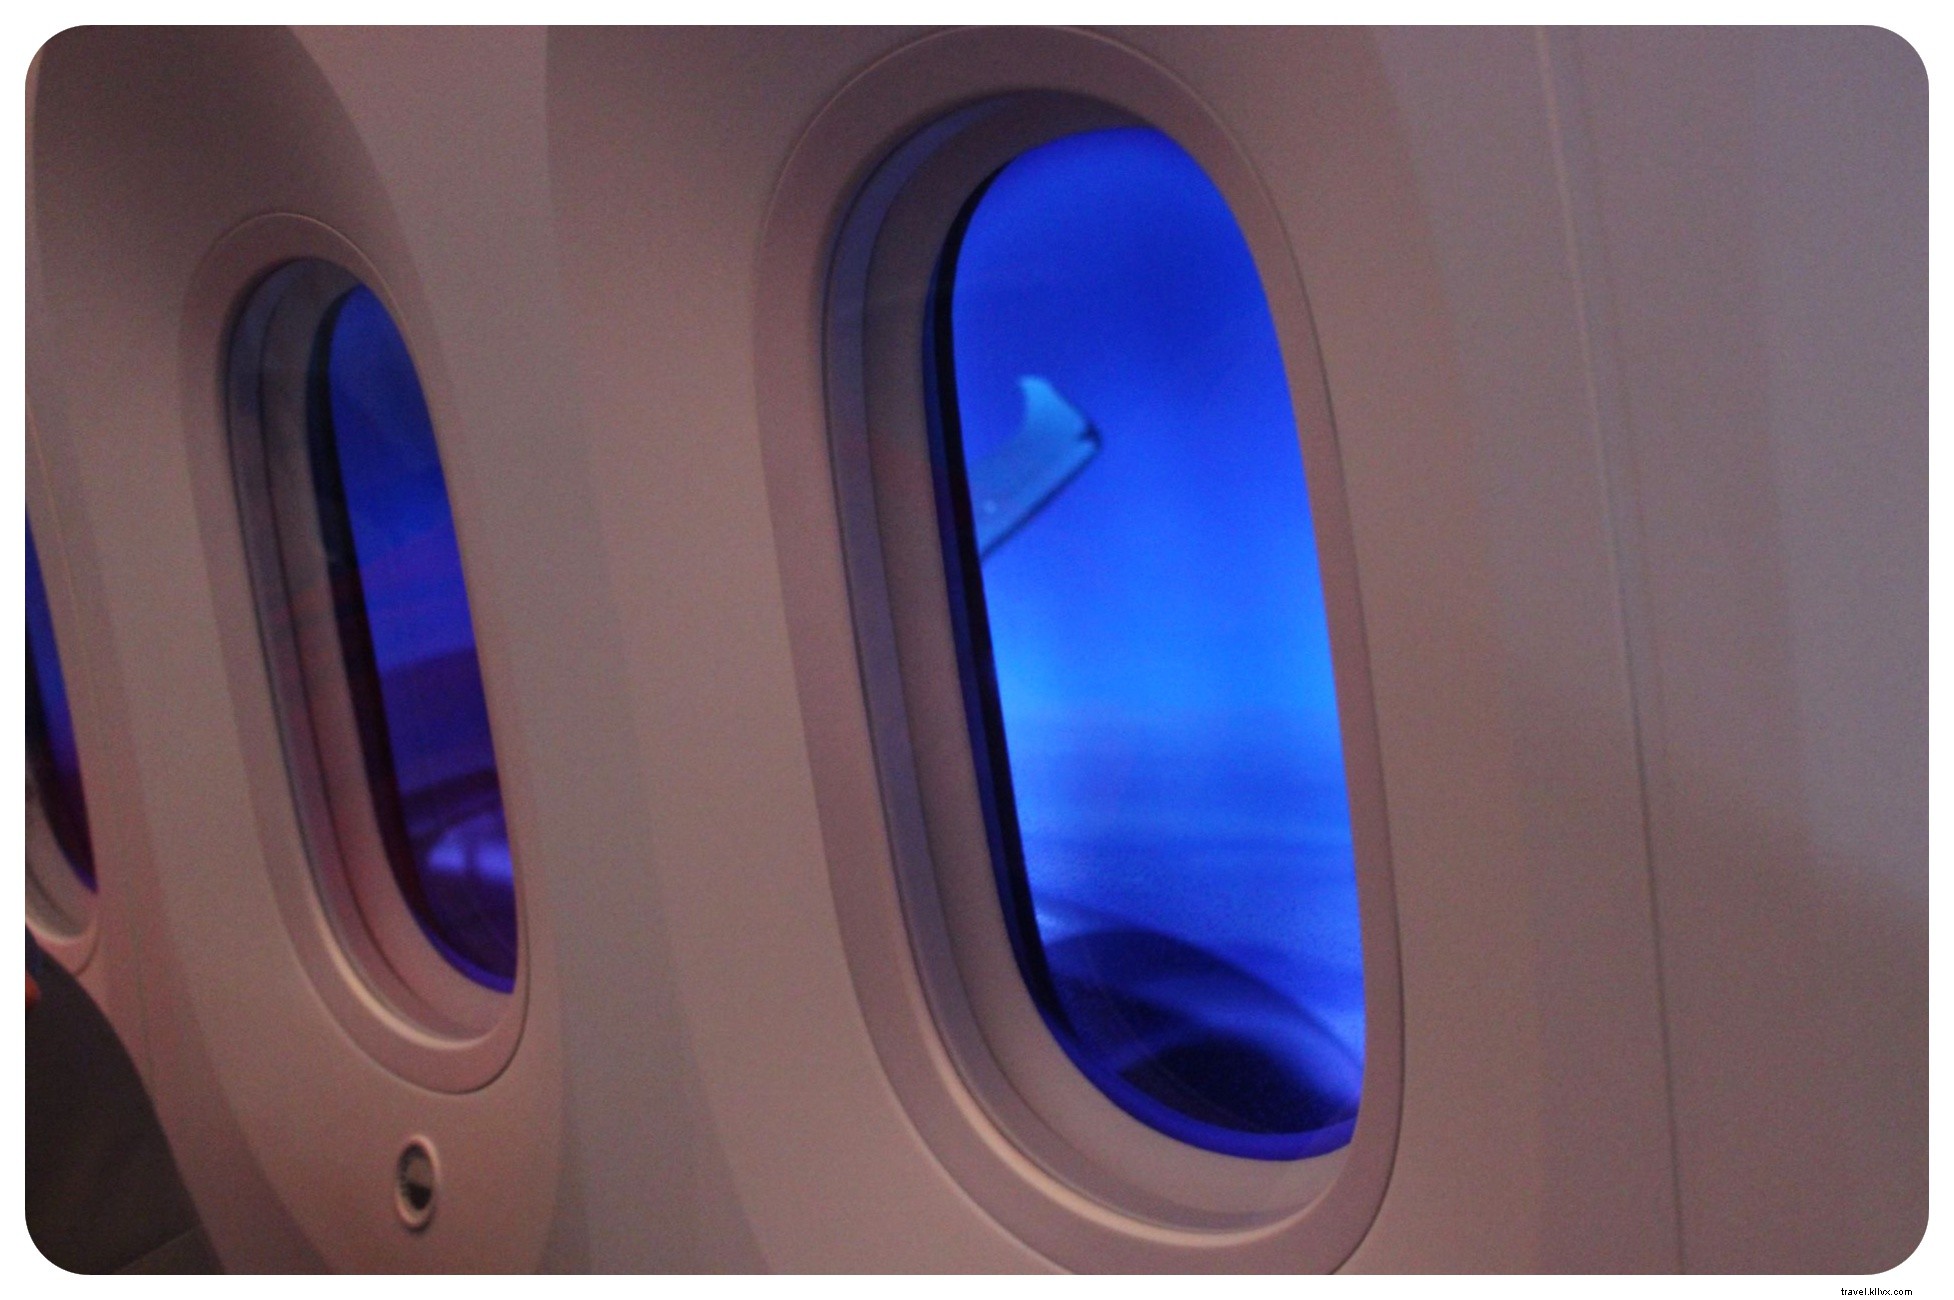 Dari Eropa ke A.S. dengan Maskapai Hemat:Pengalaman Saya dengan 787 Dreamliner dari Norwegian Air